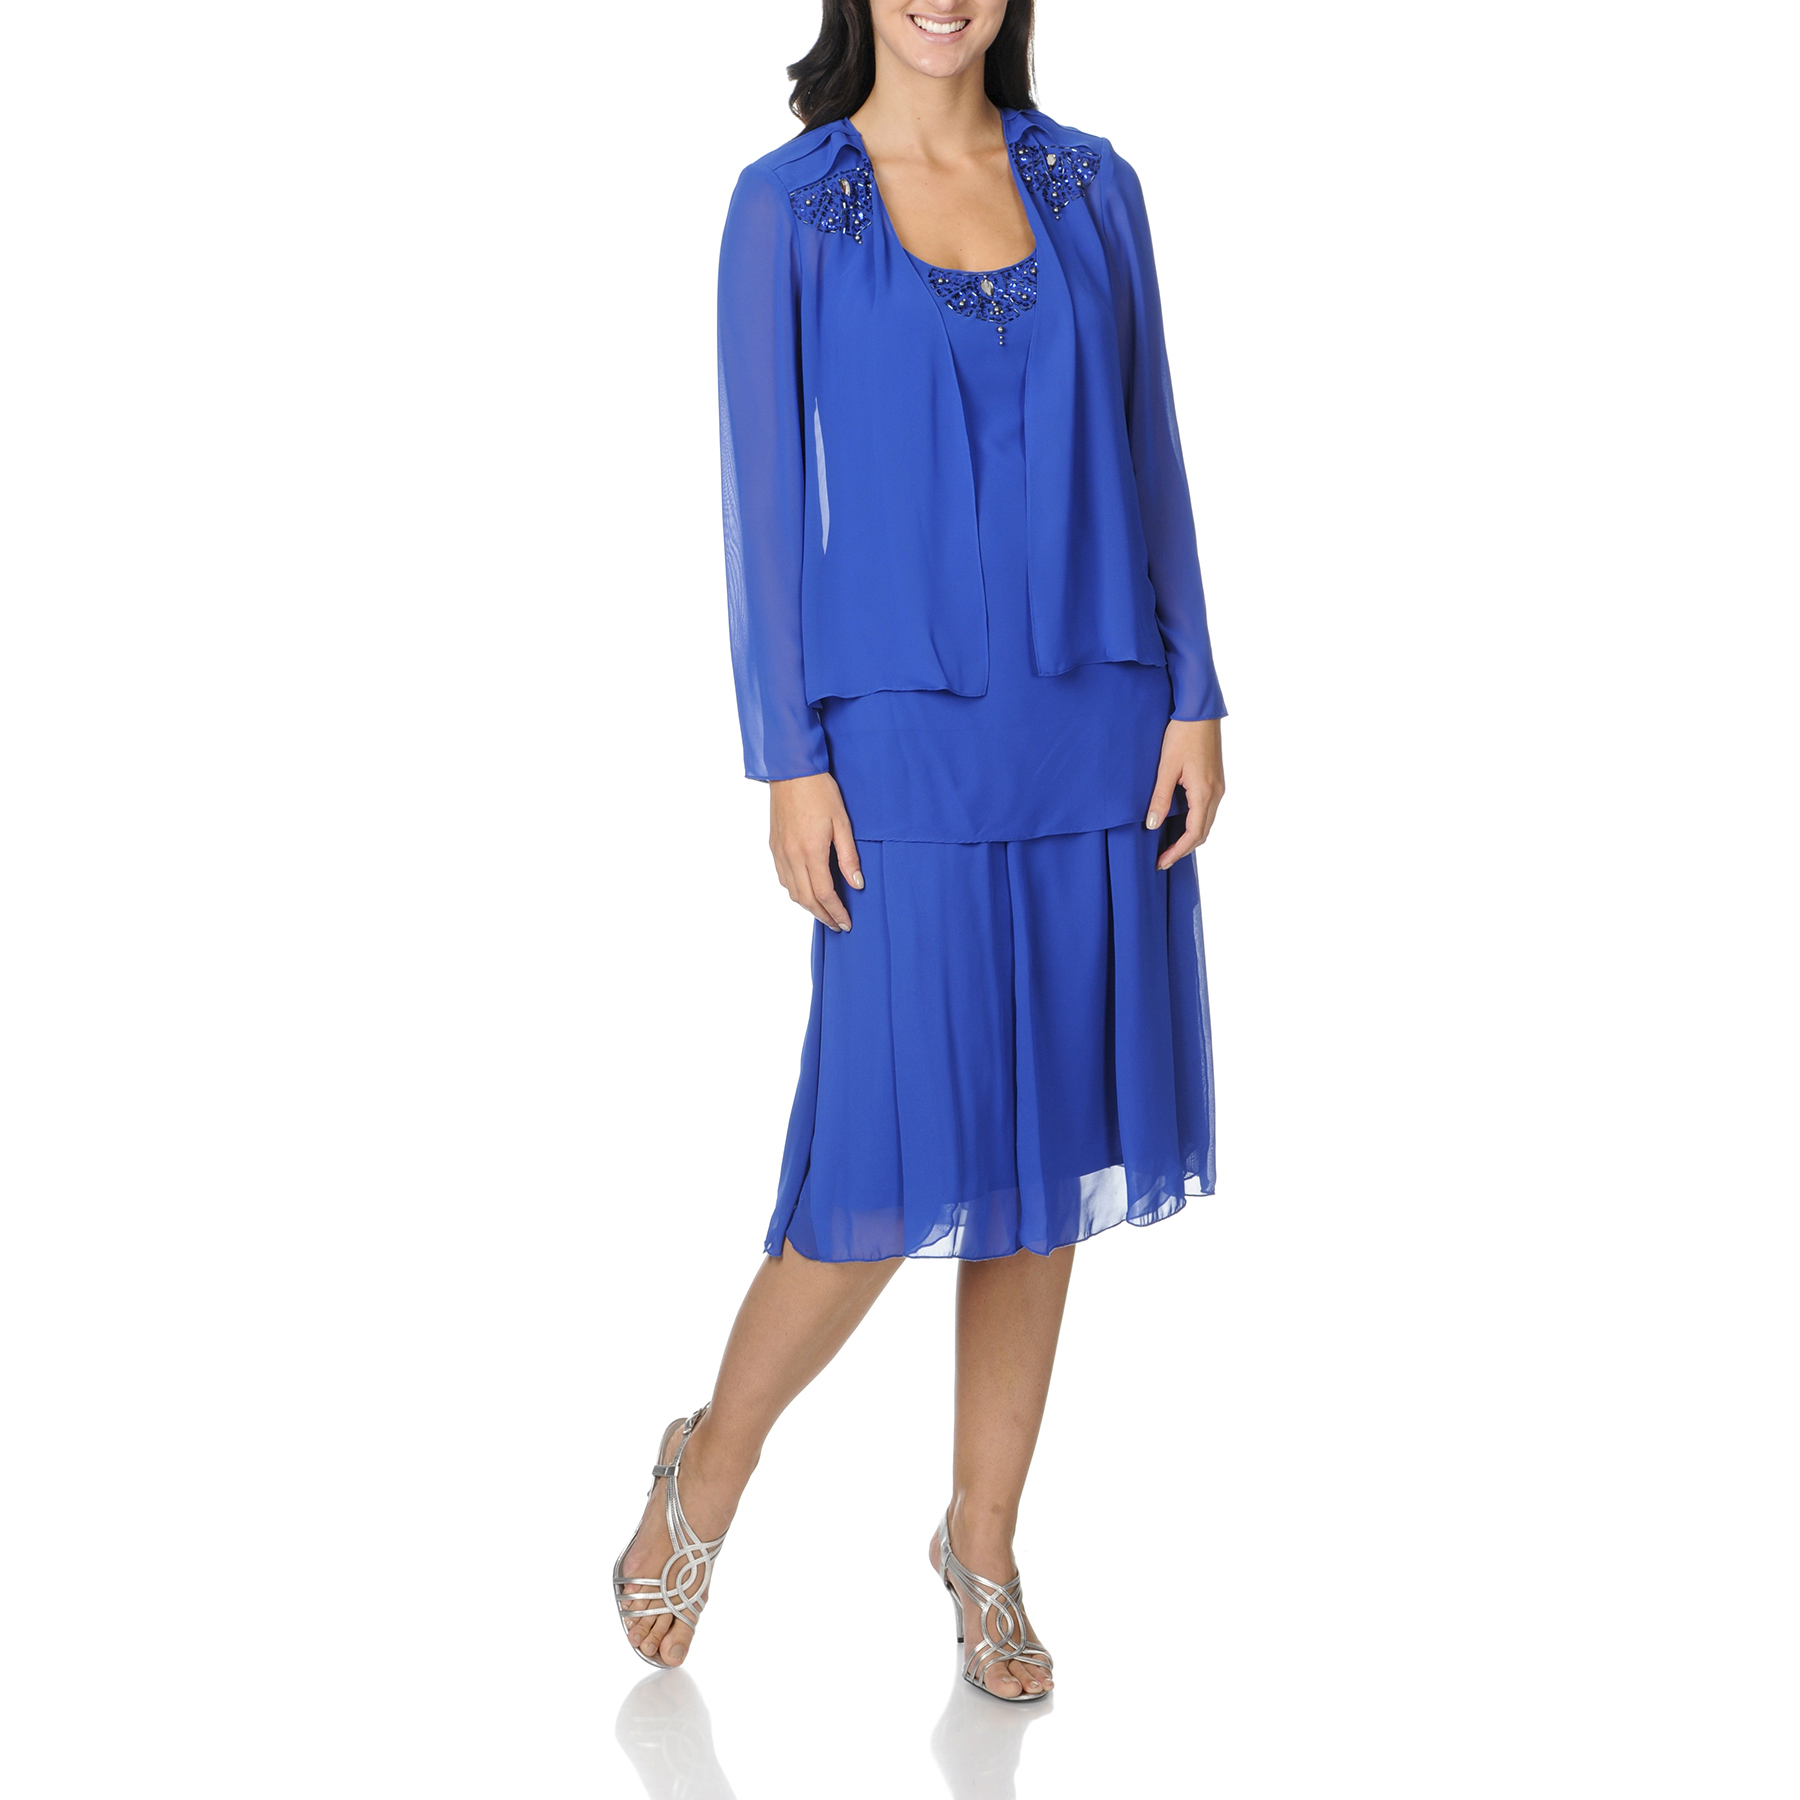 Women's 2 Piece Embellished Tiered Dress - Online Exclusive